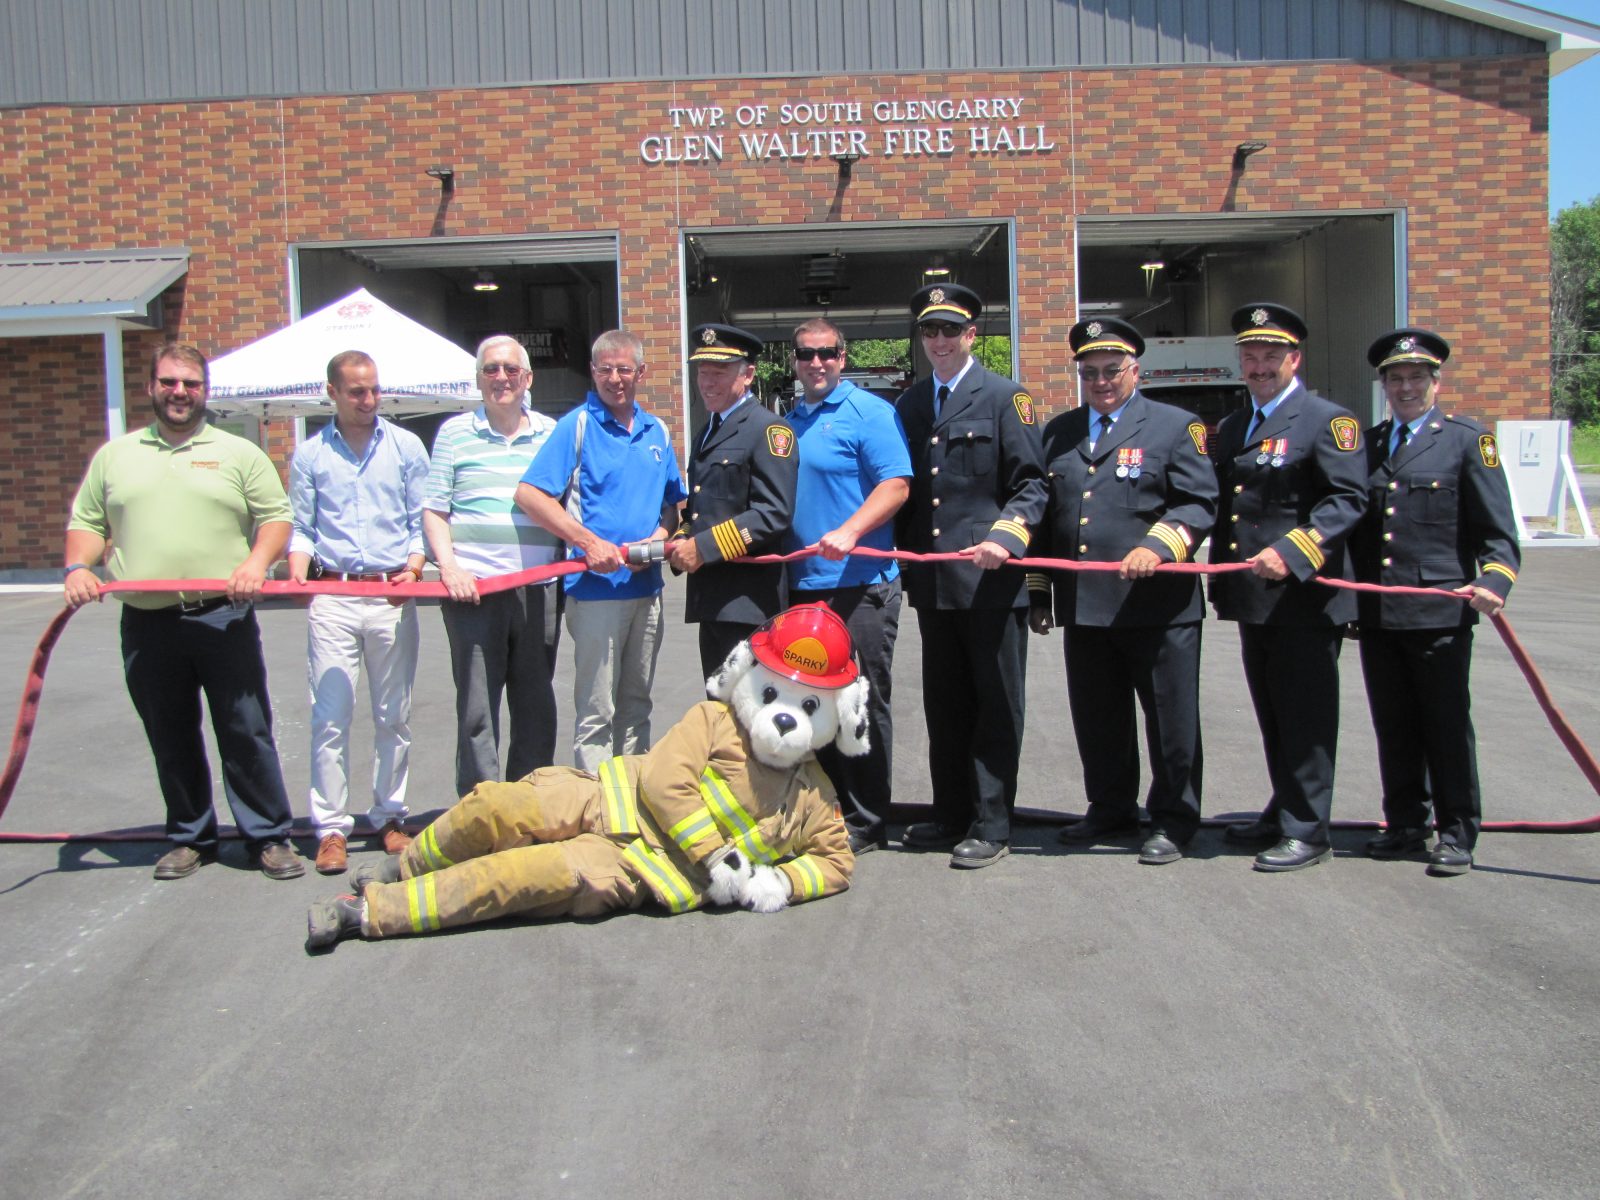 New fire hall opens in Glen Walter